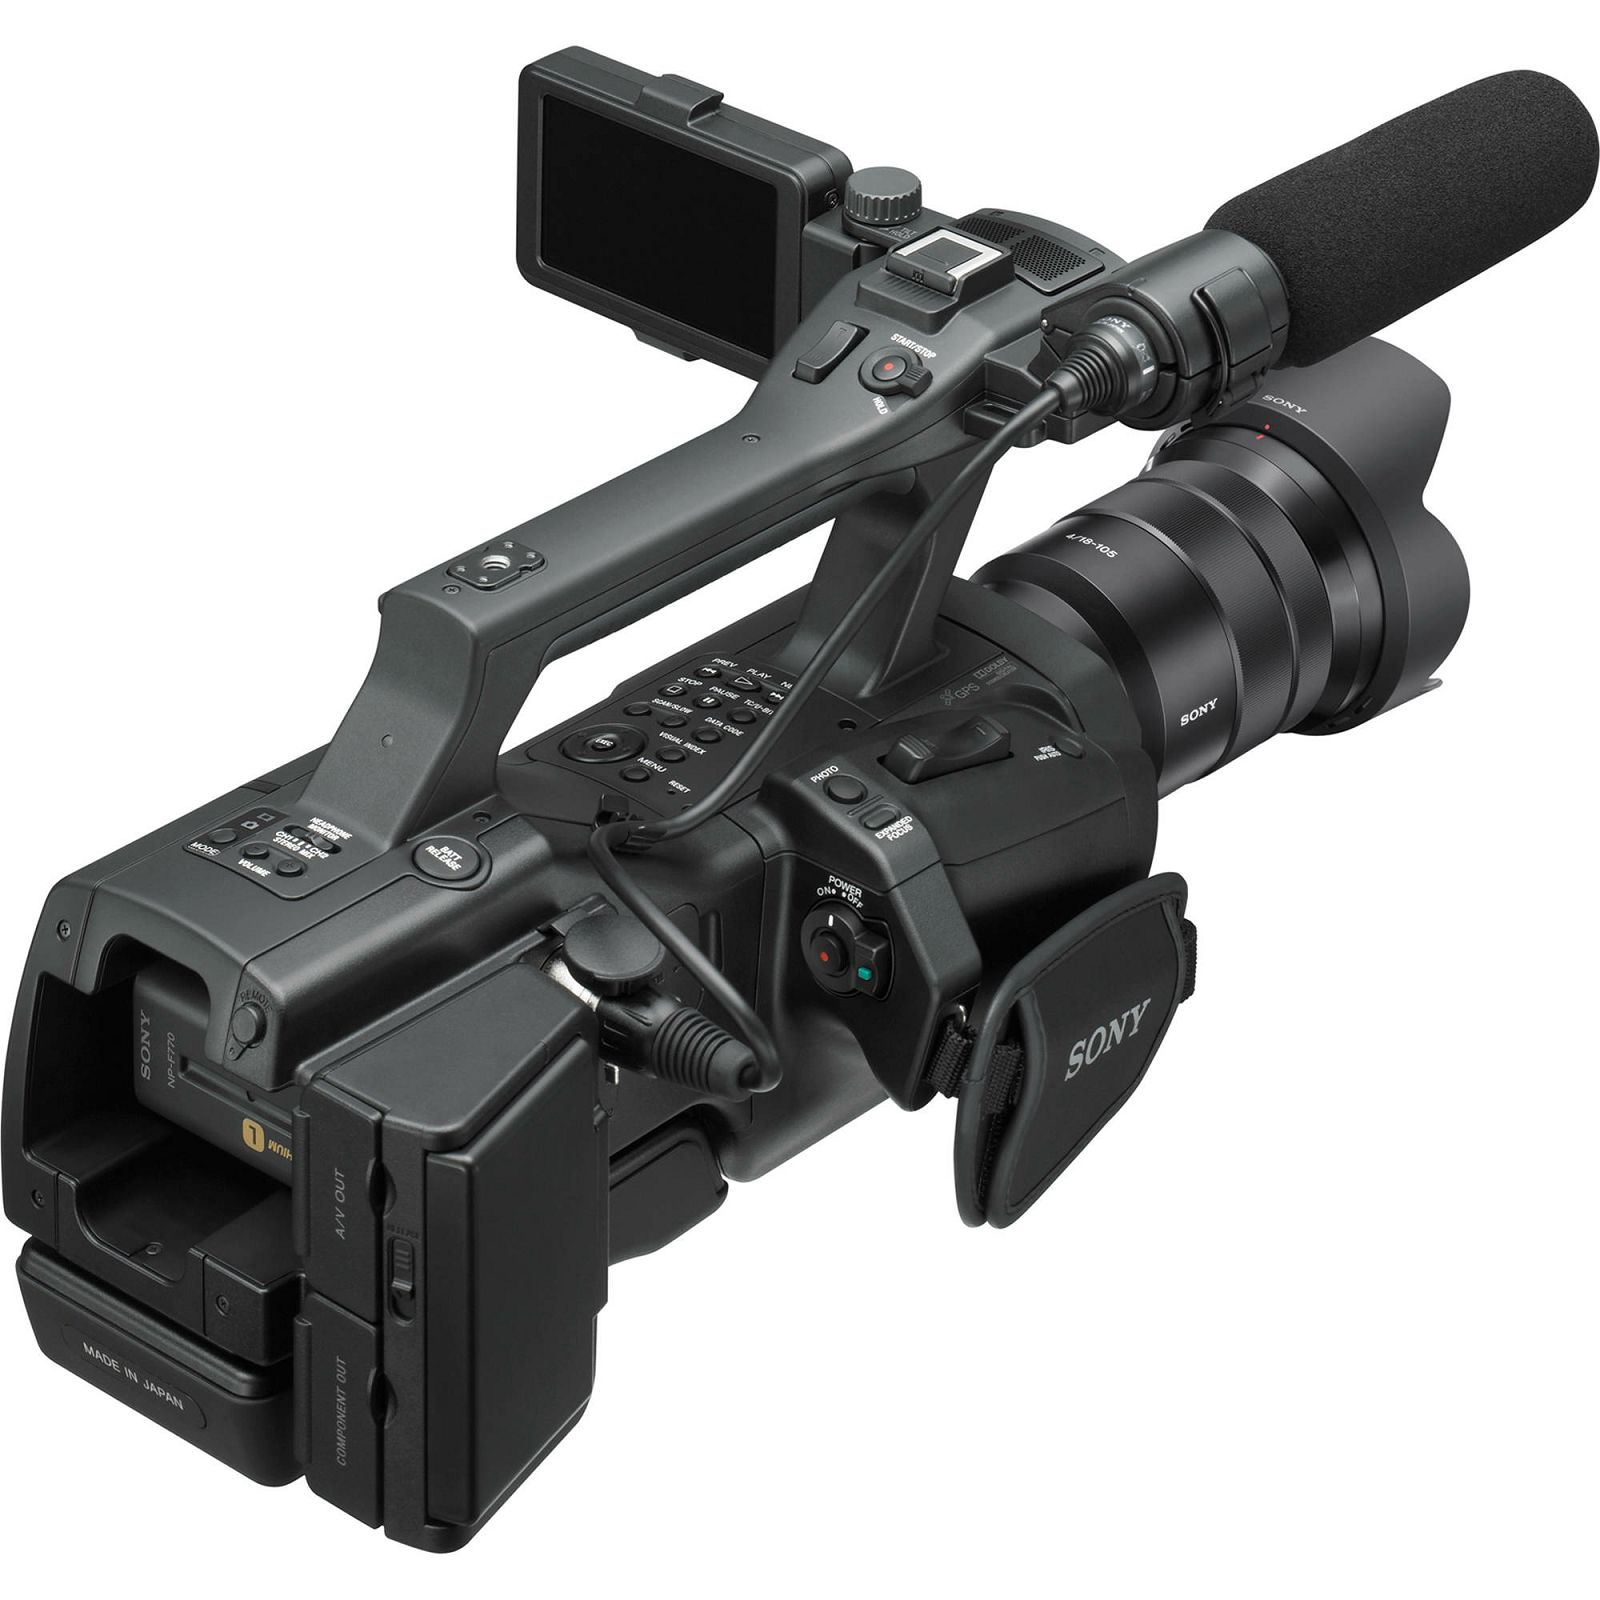 Sony NEX-EA50M kamera + 18-105mm f/4 zoom objektiv E-mount FullHD 1080p 60fps APS-C CMOS sensor XLR